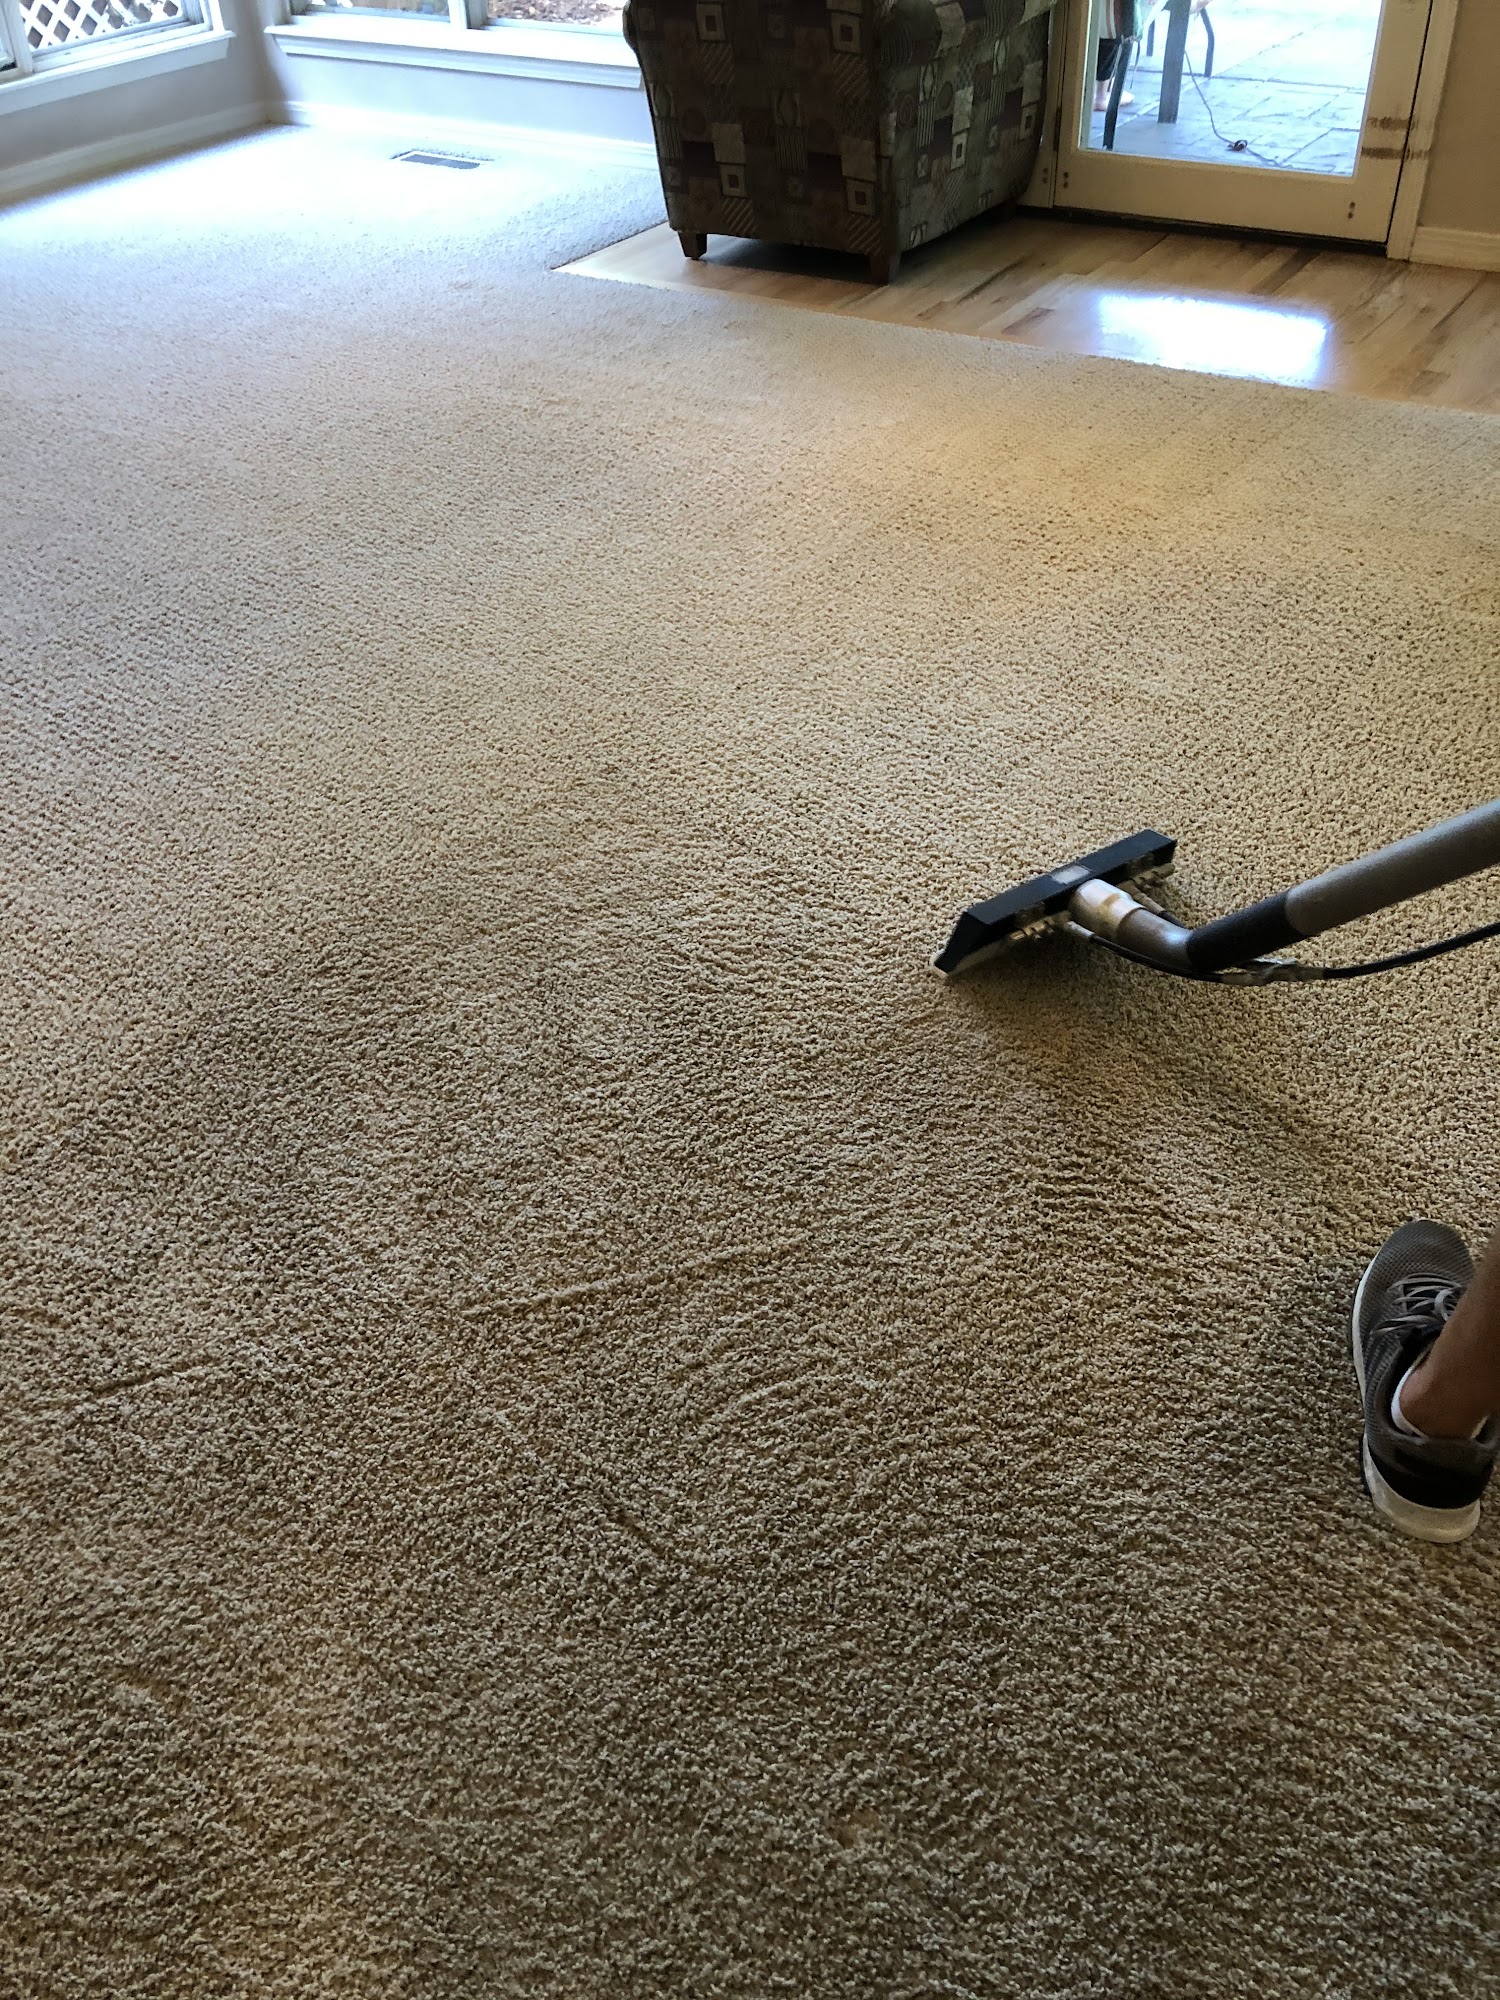 SuperShine Carpet Cleaning